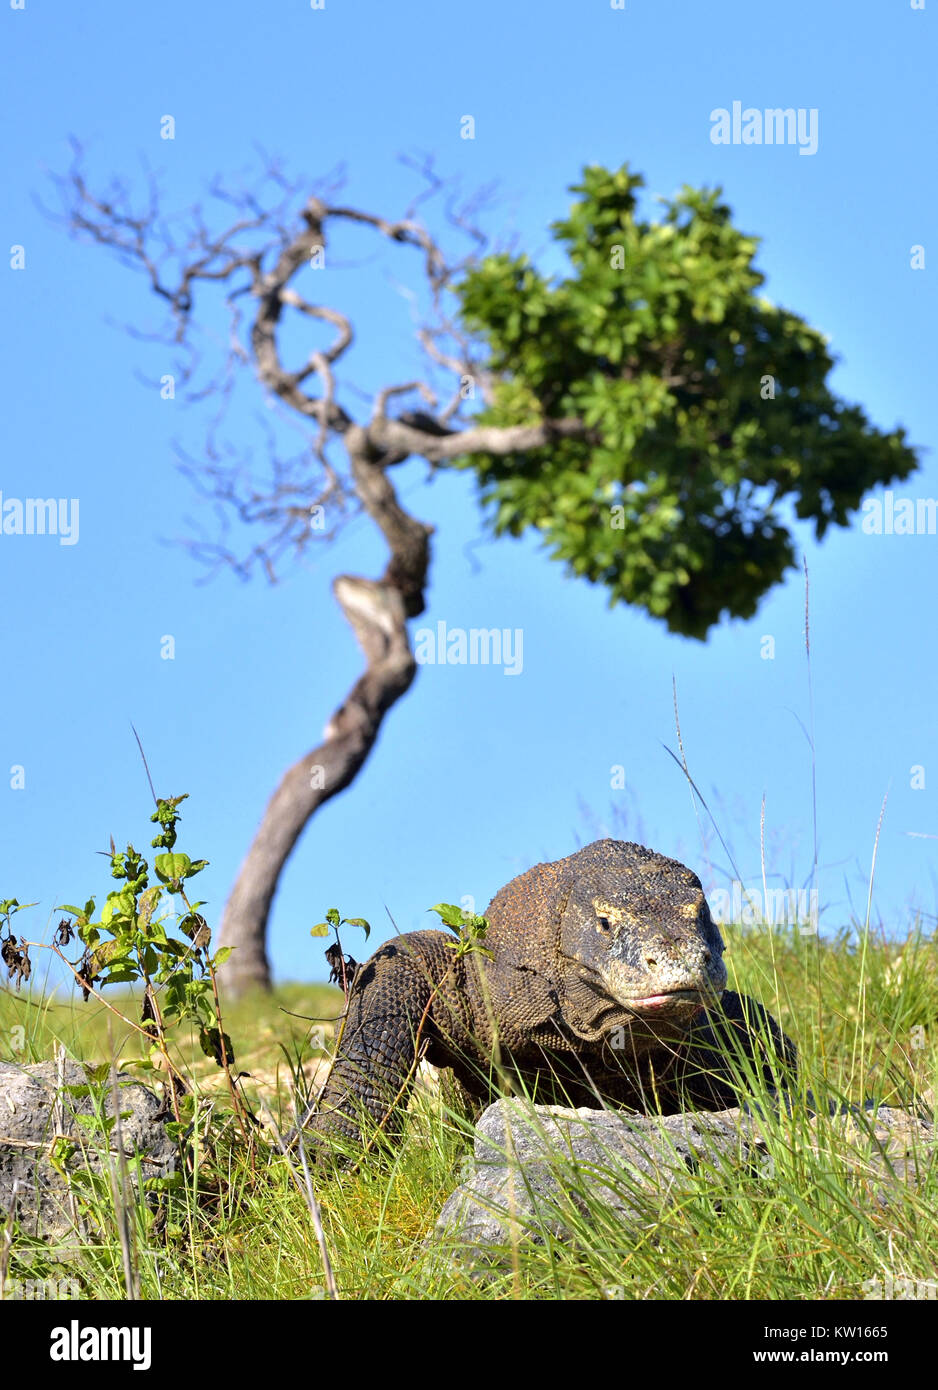 Drago di Komodo (Varanus komodoensis ) in habitat naturali. Più grande lucertola vivente nel mondo. isola Rinca. Indonesia. Foto Stock